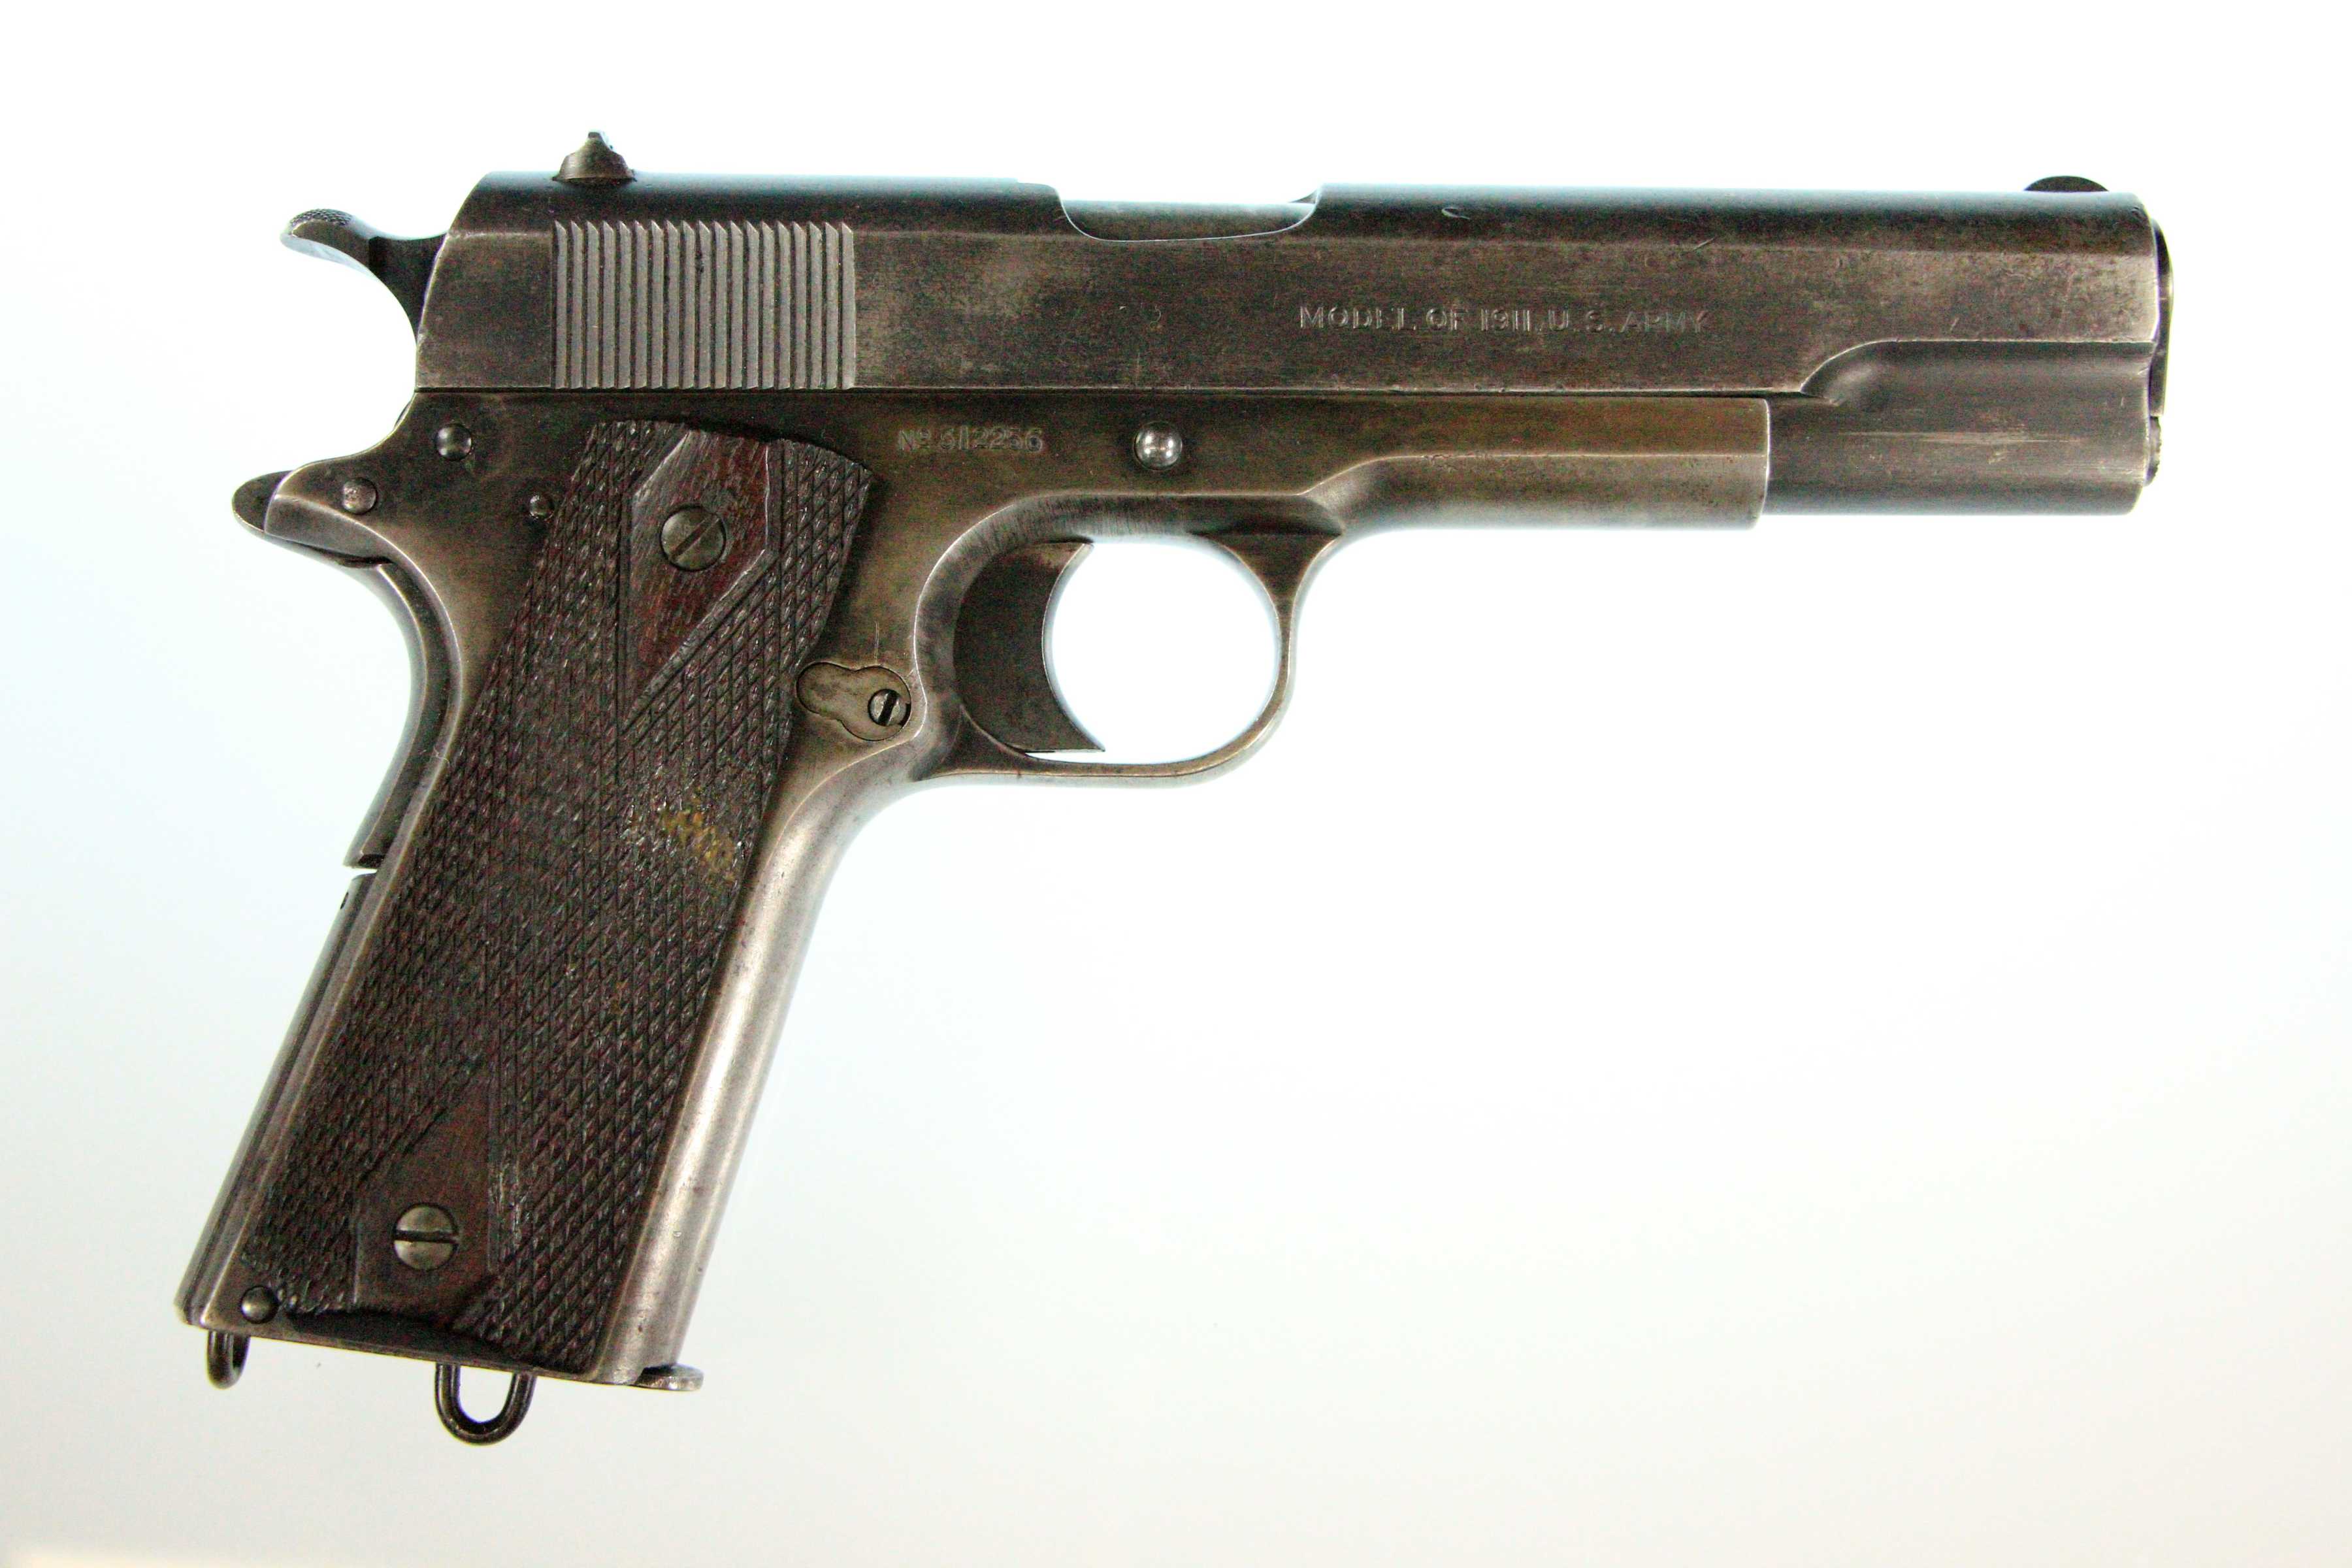 Colt 1911, 45 ACP, 312246, Mfg. 1918